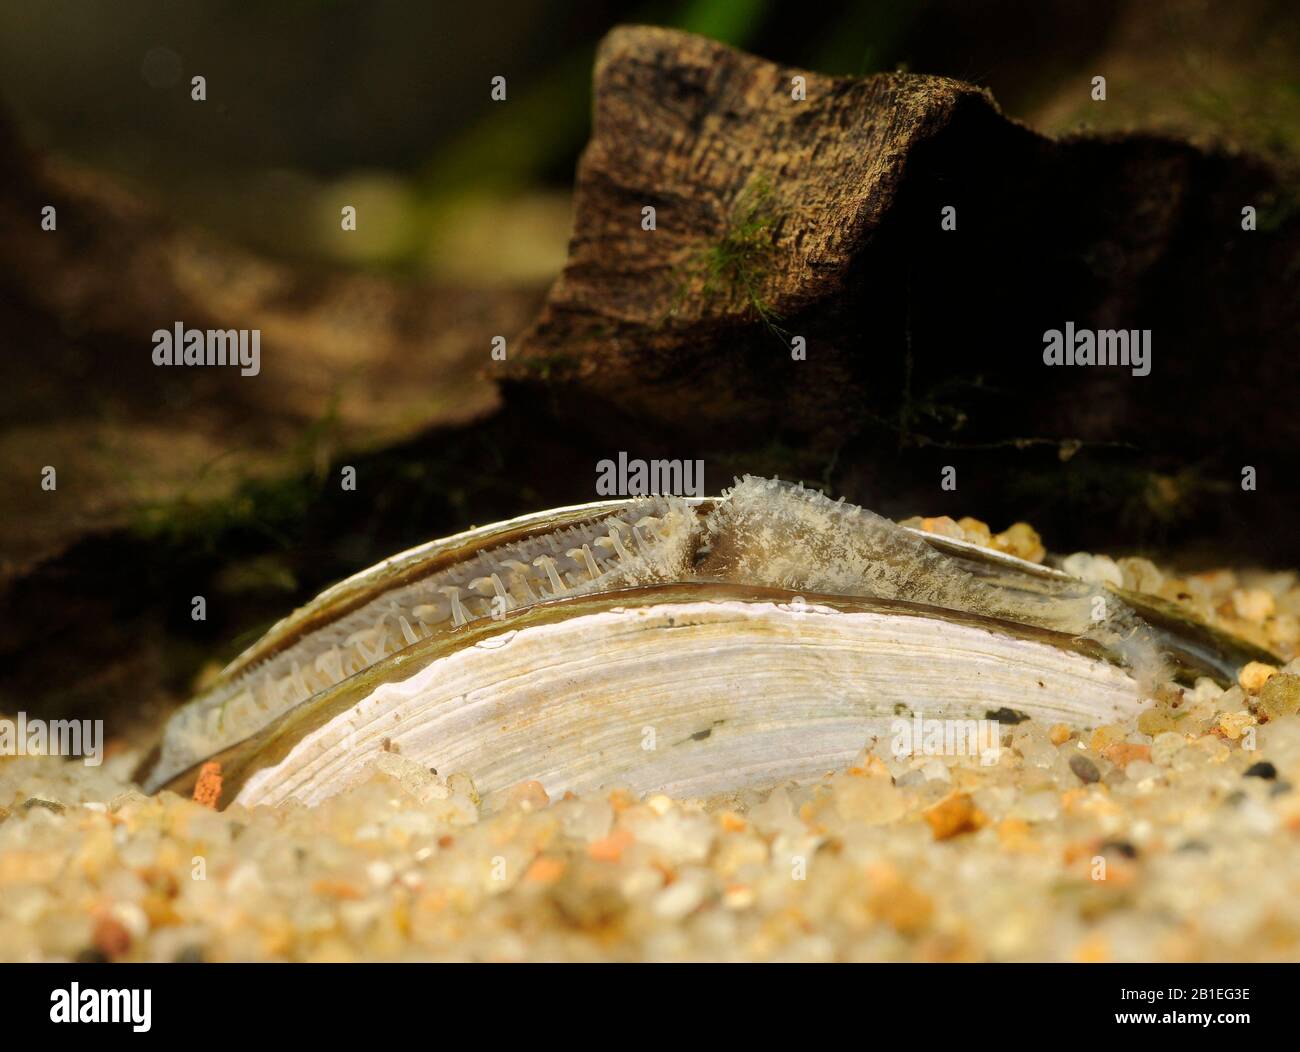 Freshwater clam (Polymesoda sp.) in aquarium Stock Photo